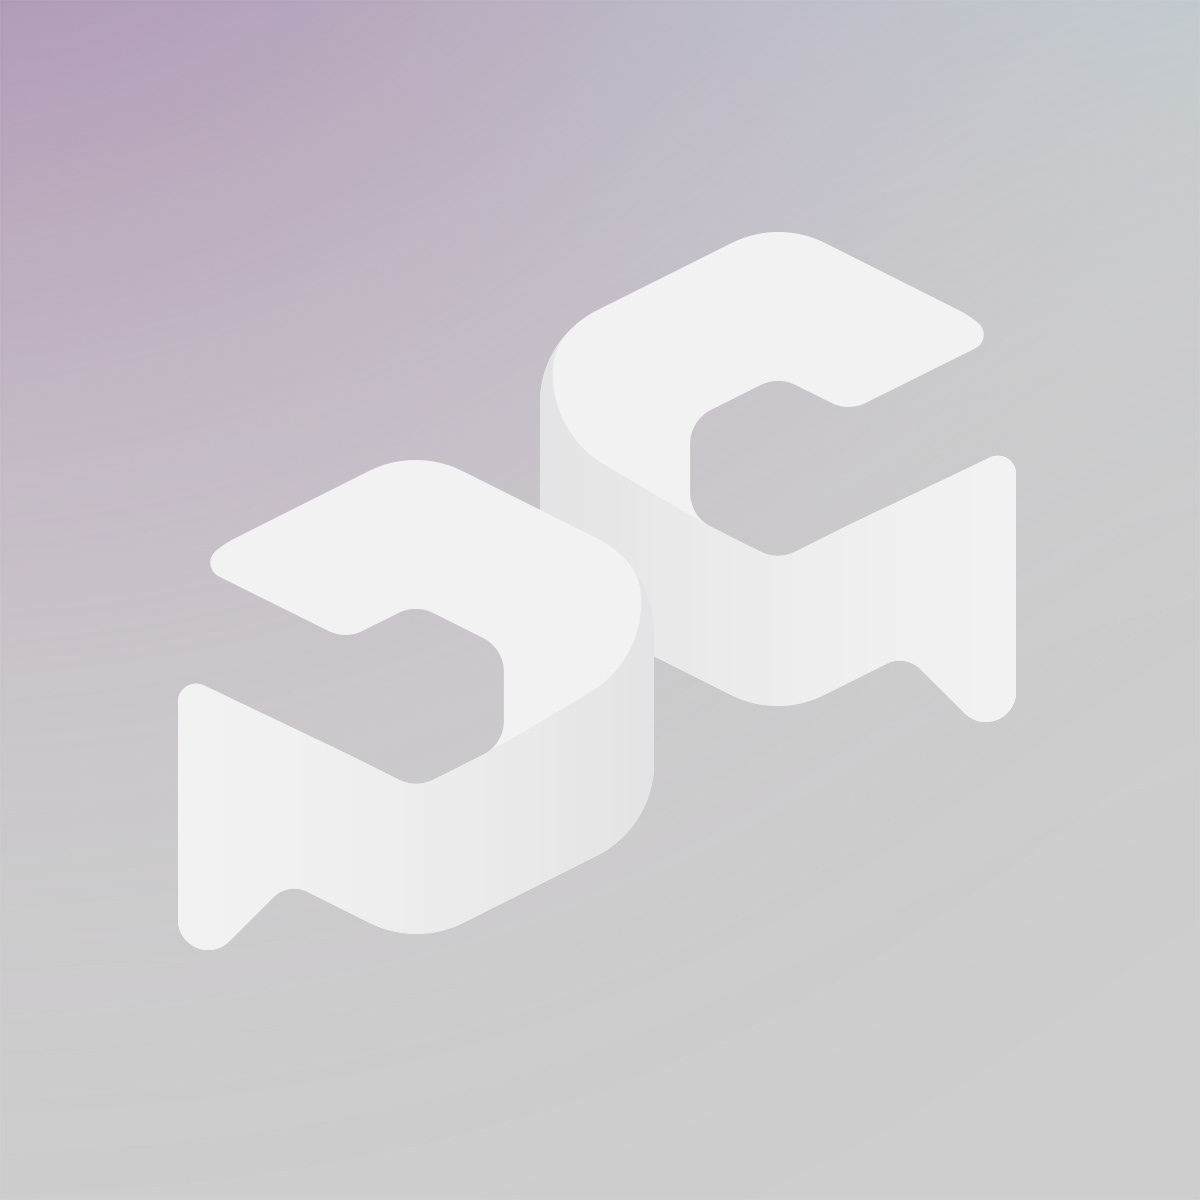 premium minds logo software identity corporate stationary cube Logotype business card